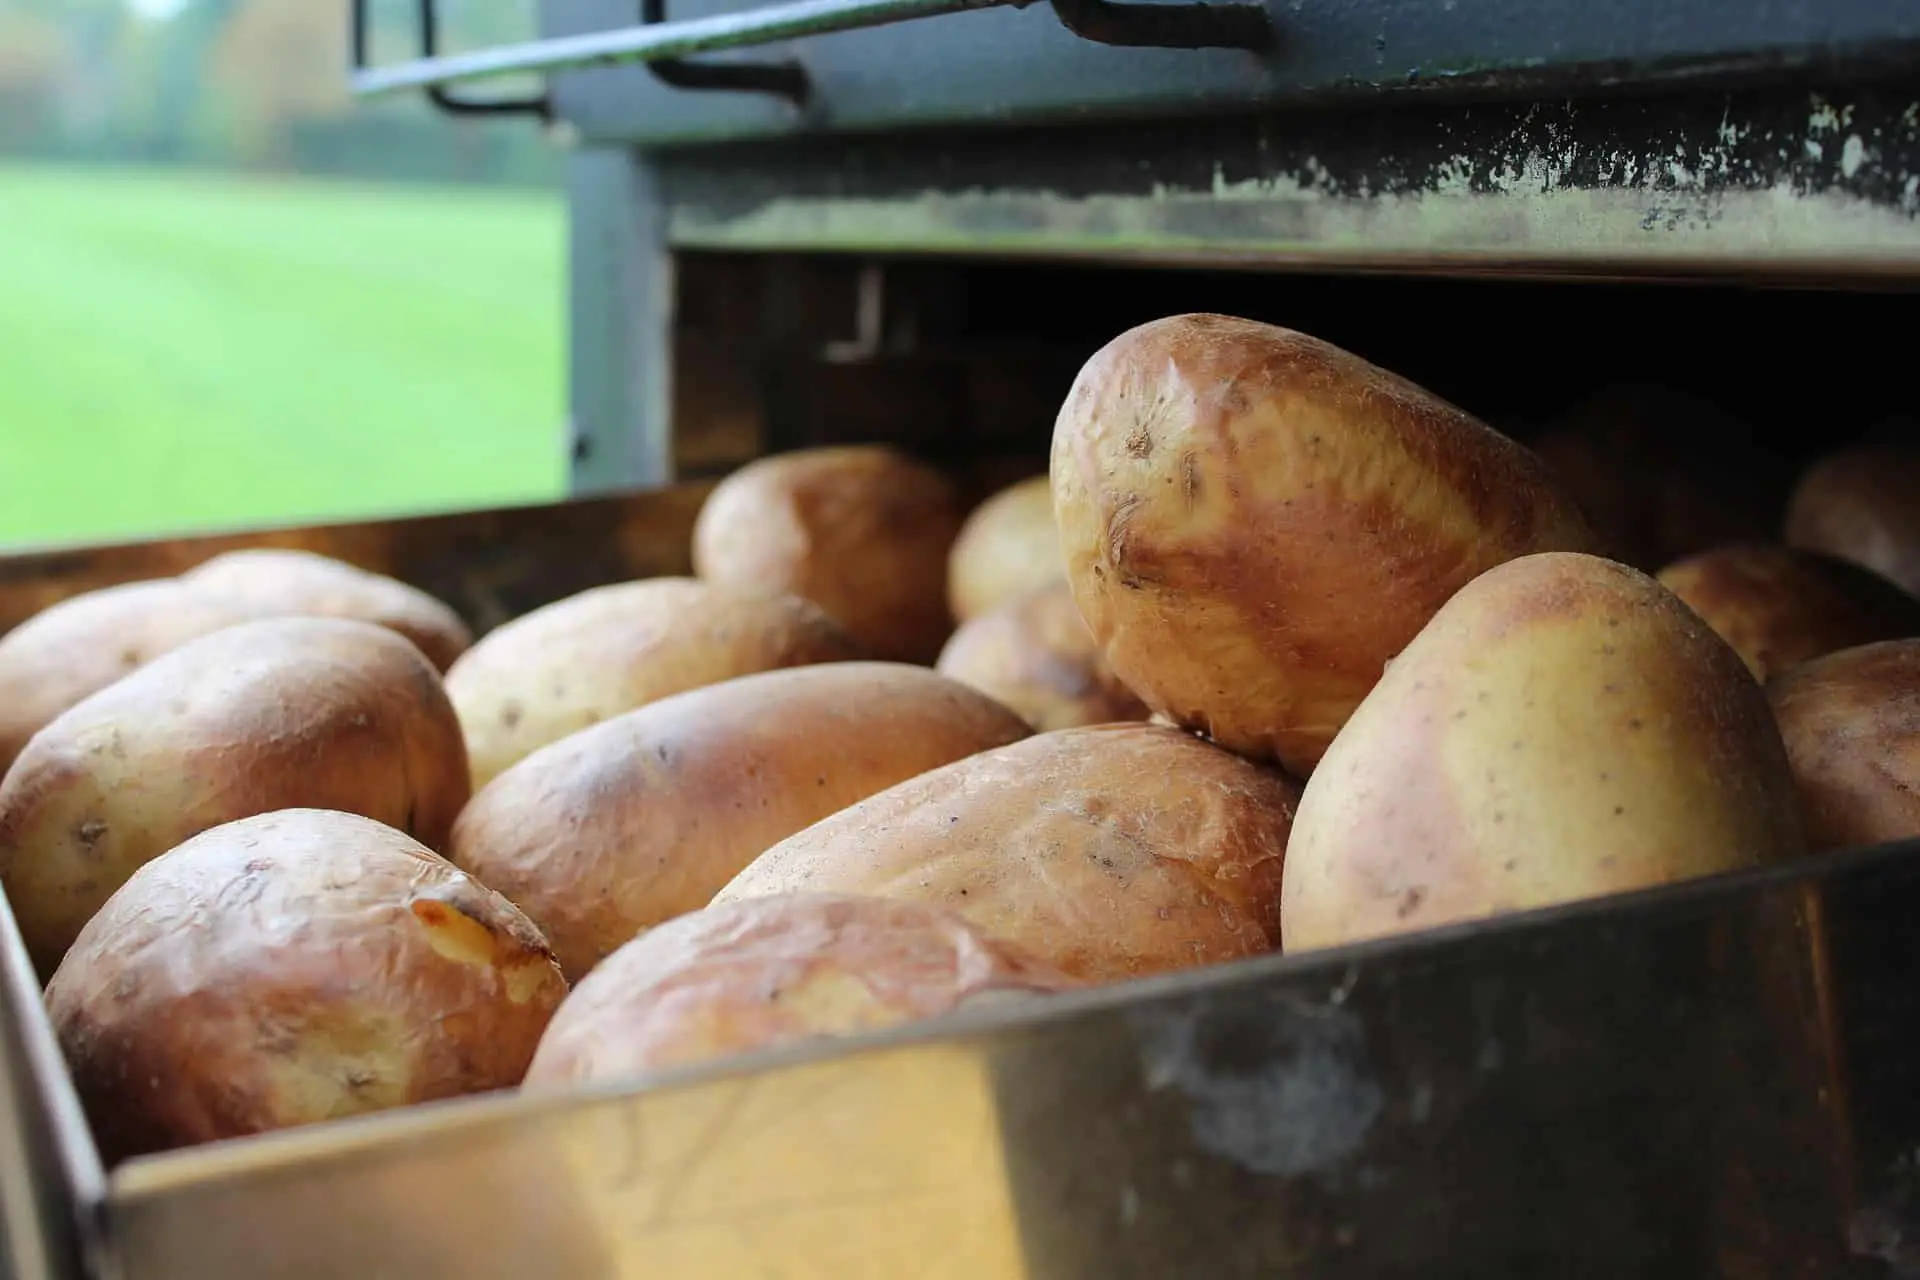 Fresh Potatoes inside the Oven